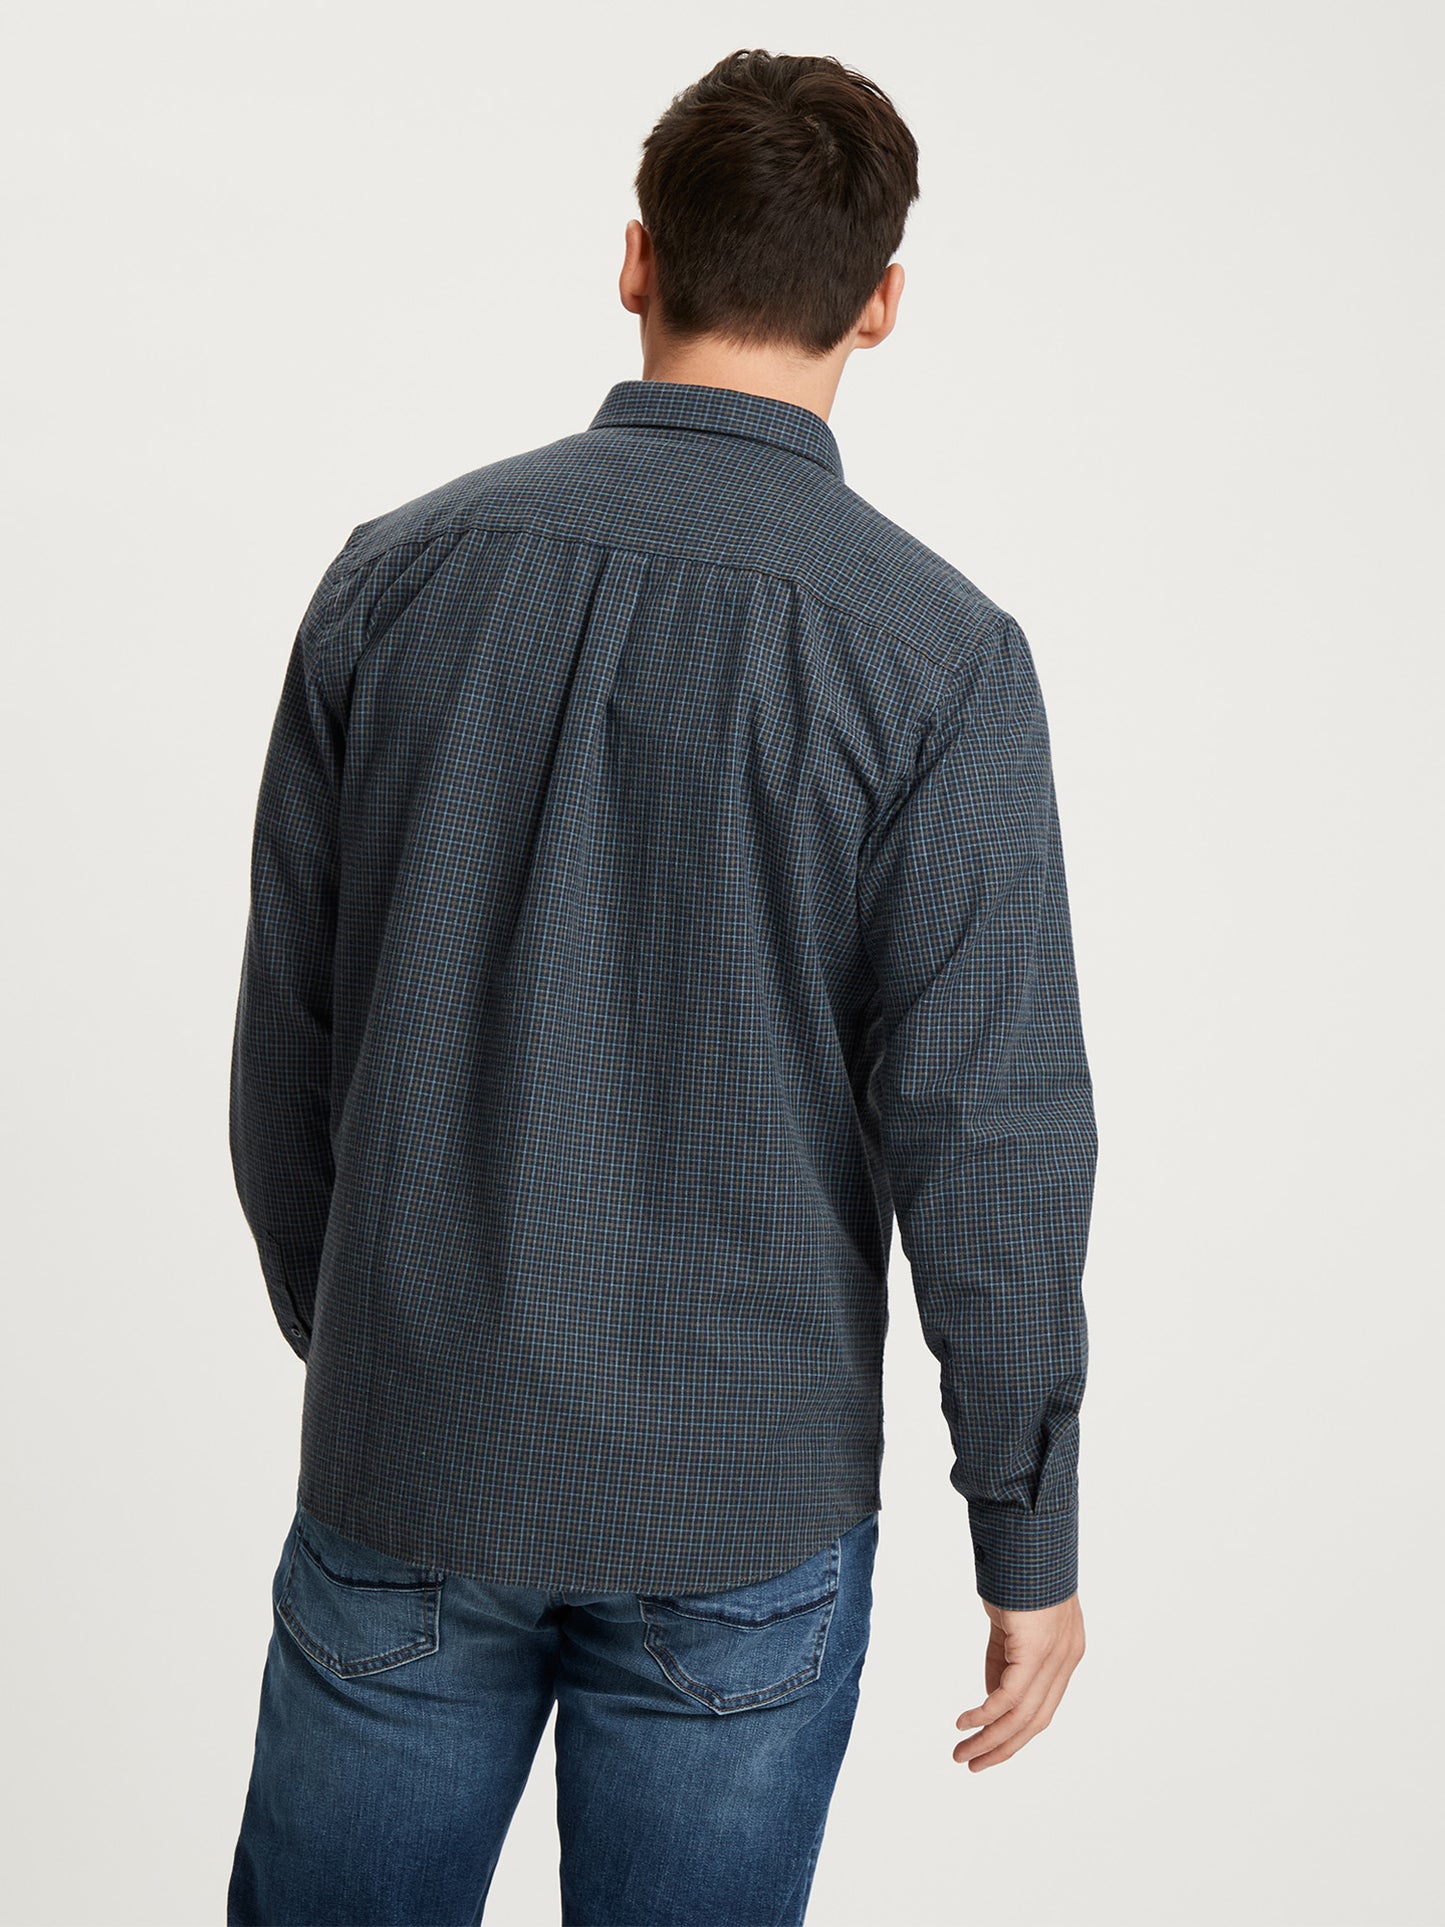 Men's regular long-sleeved shirt checked dark green.